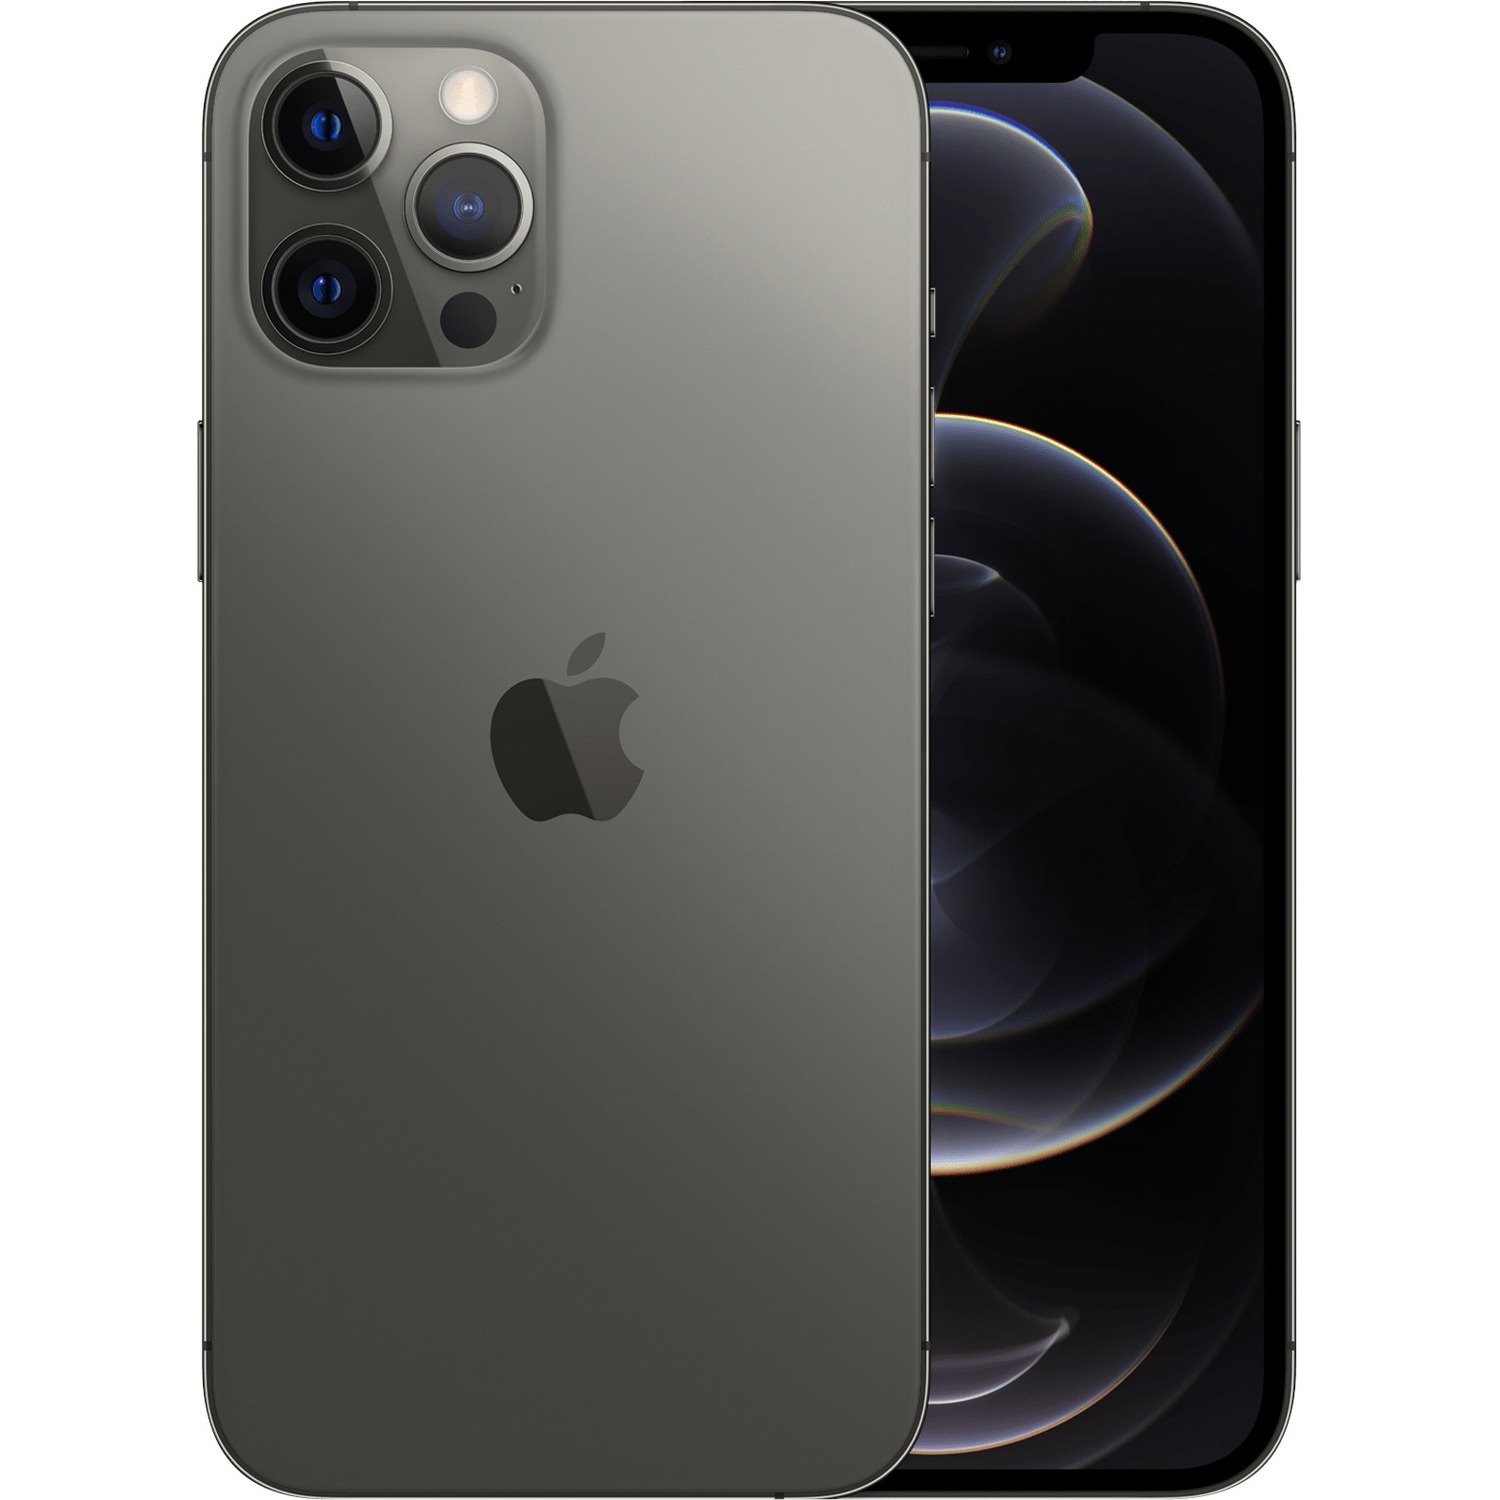 Apple iPhone 12 Pro A2341 512 GB Smartphone - 6.1" OLED 2532 x 1170 - Hexa-core (6 Core) - 6 GB RAM - iOS 14 - 5G - Graphite